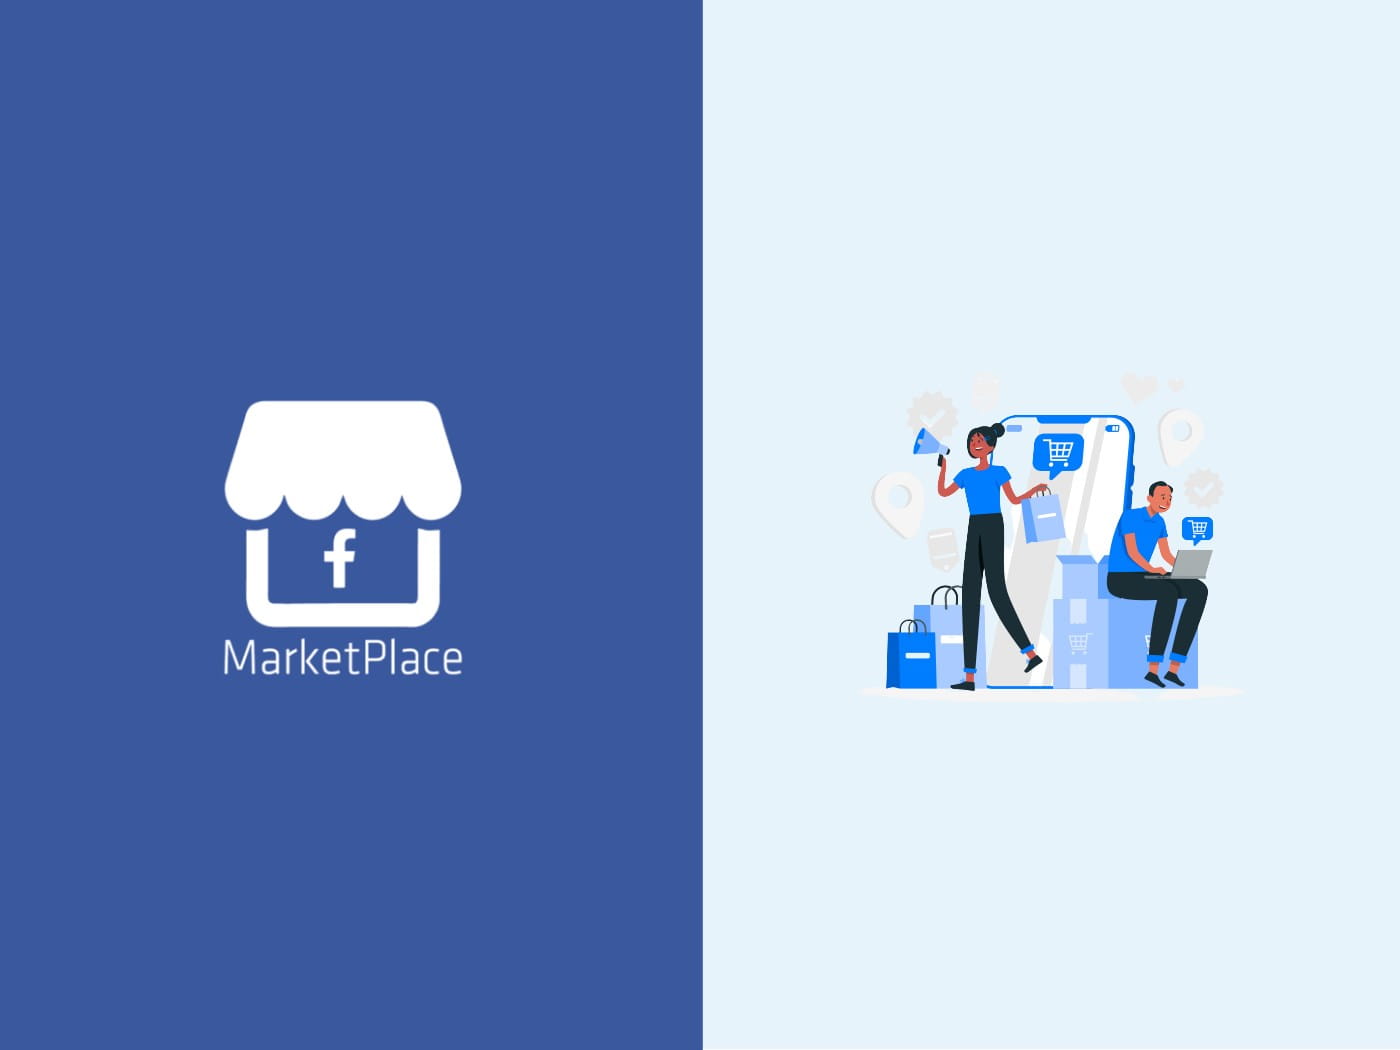 Facebook Marketplace - Facebook Marketplace Community